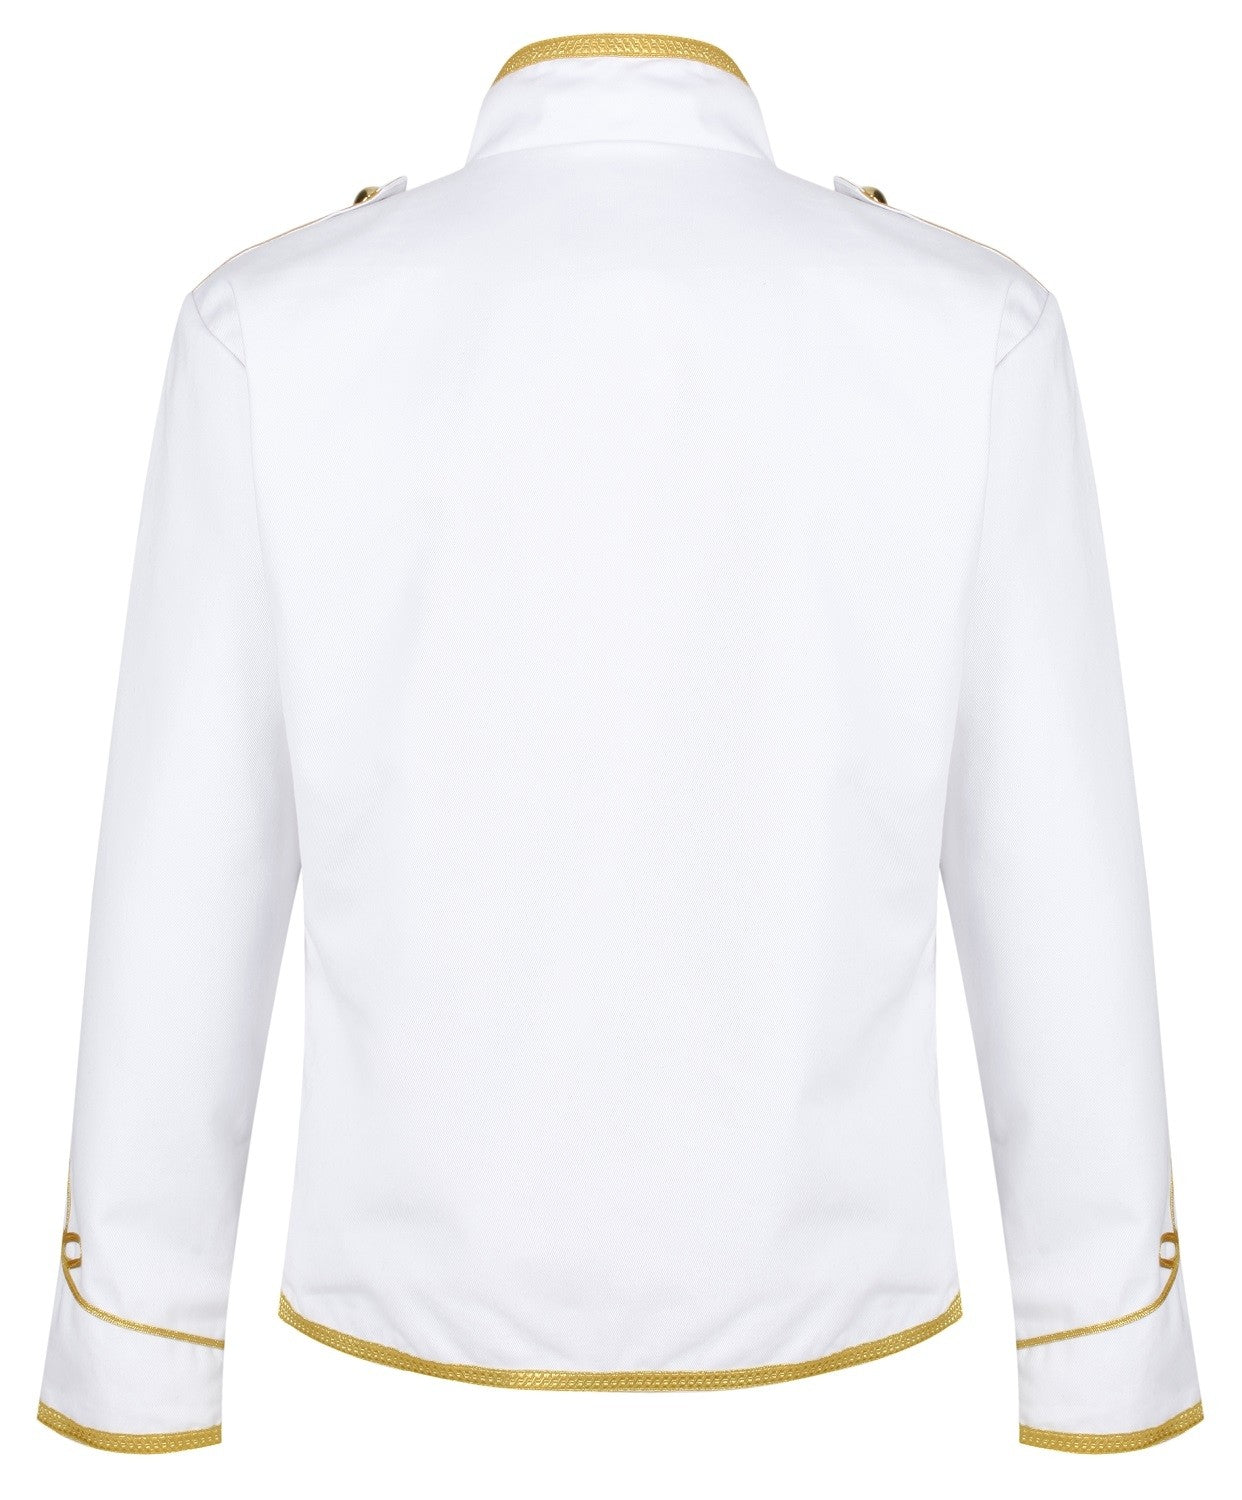 Ro Rox White Gold Military Parade Jacket